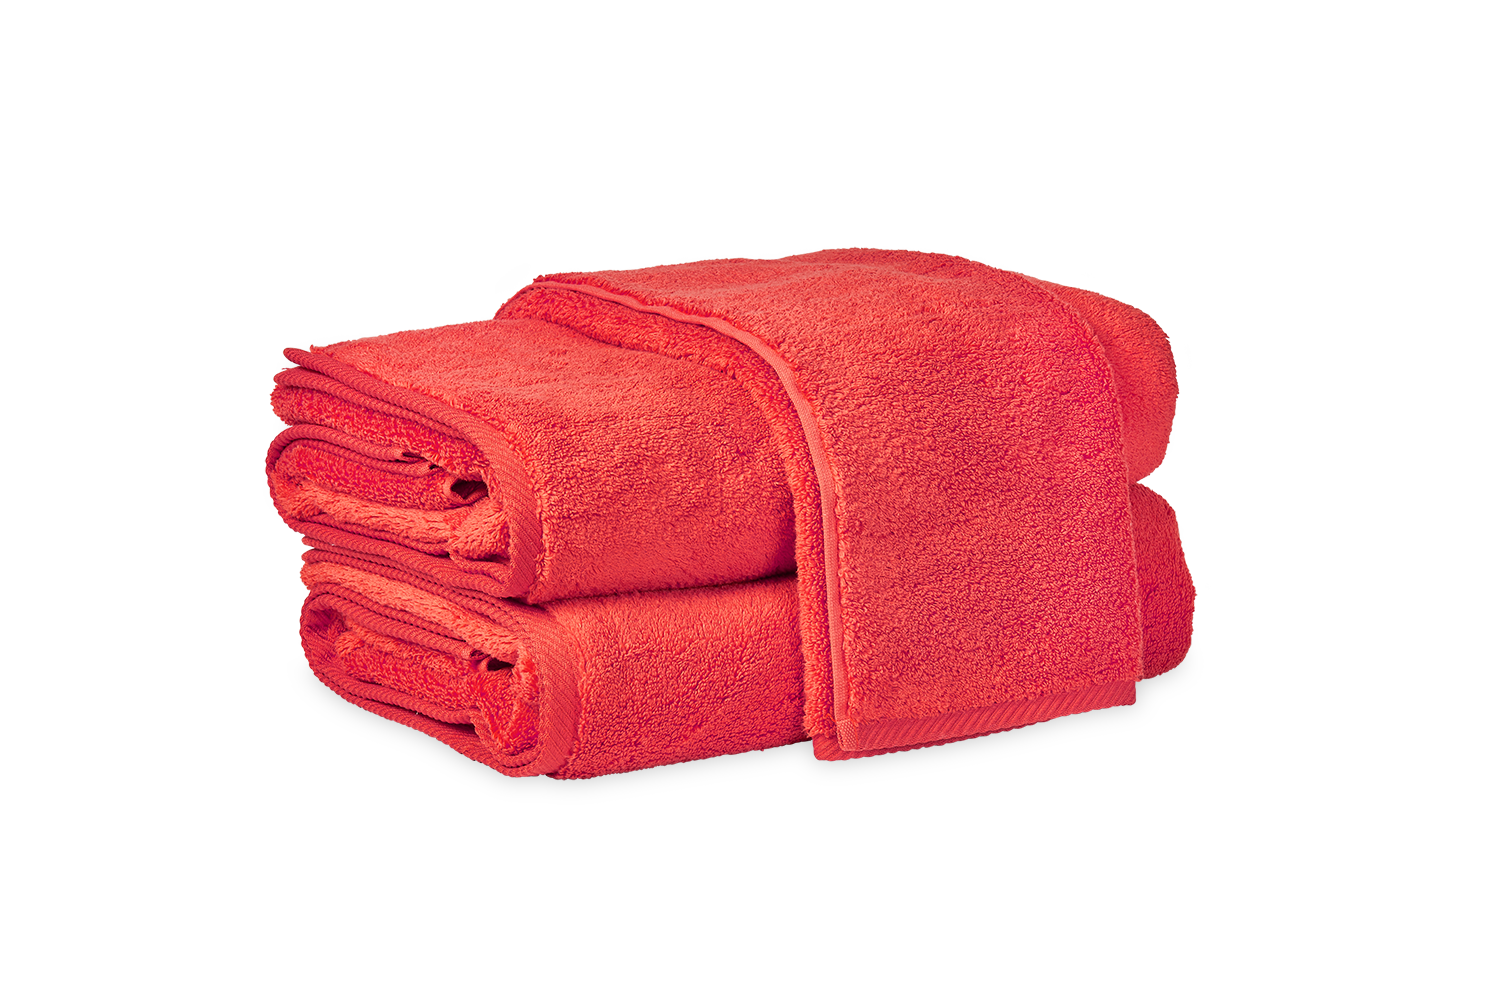 Matouk Milagro Towels